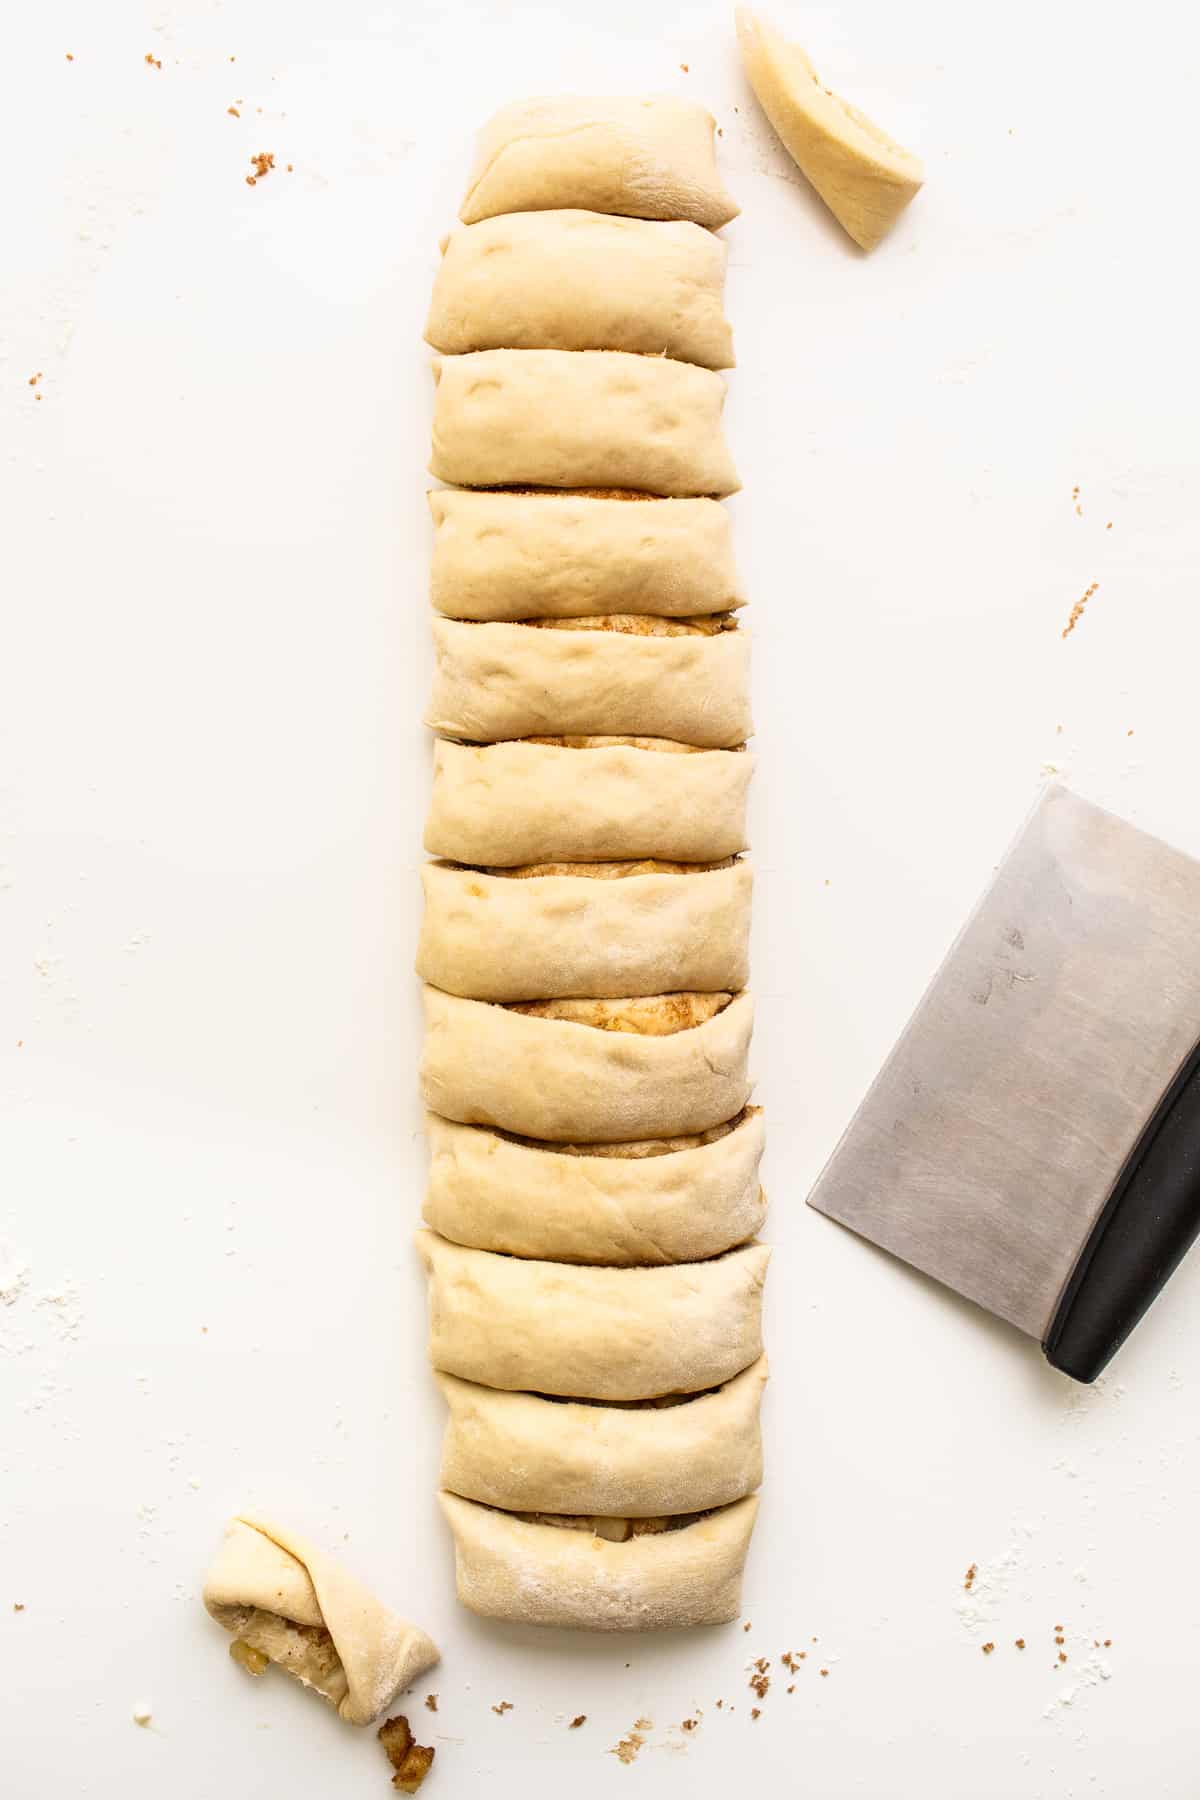 Apple cinnamon roll dough cut into rolls.